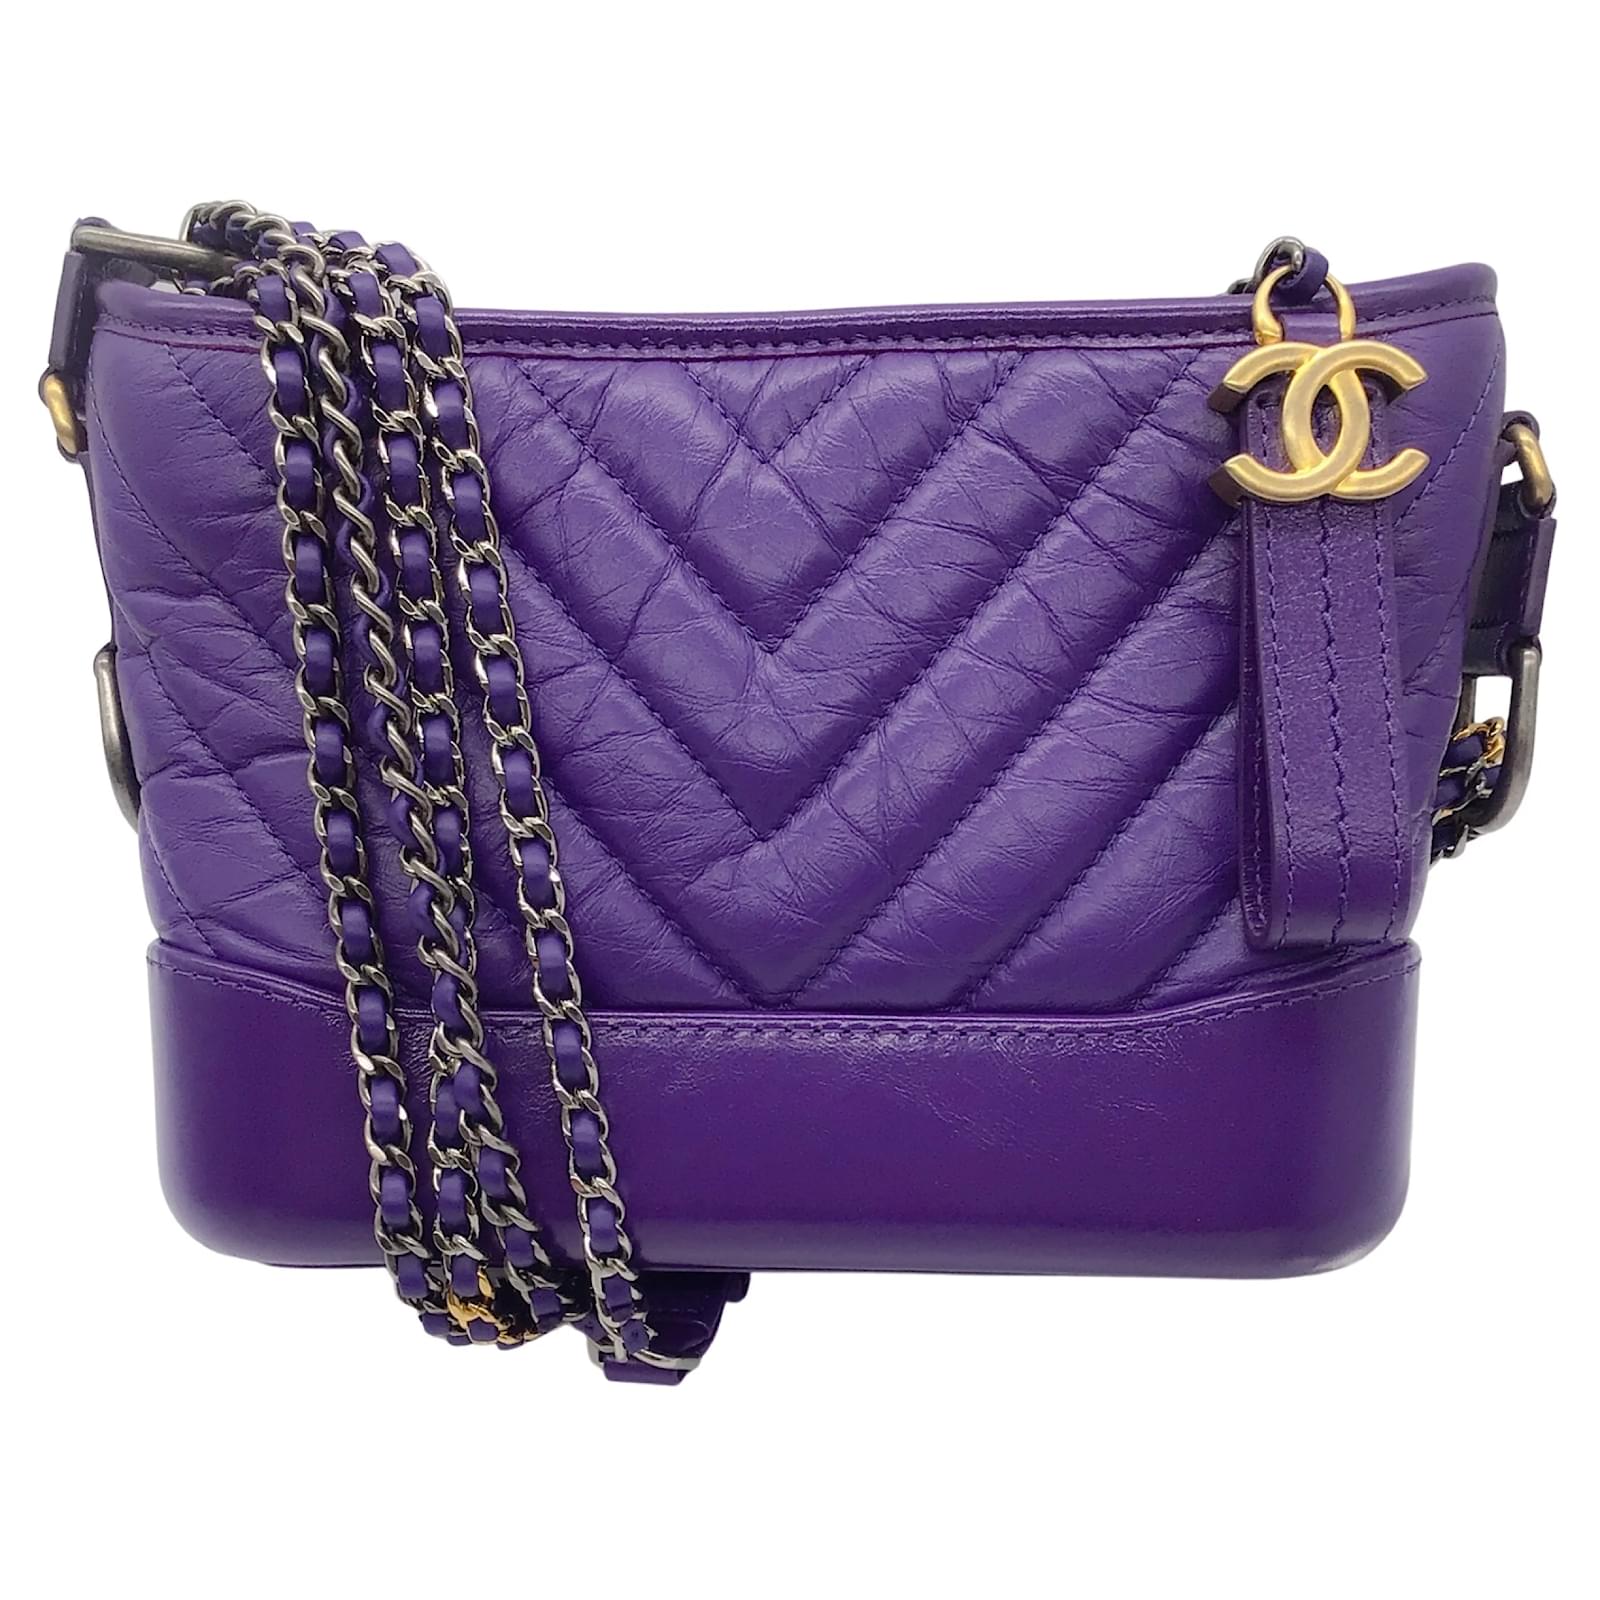 Chanel Small Gabrielle Hobo Handbag